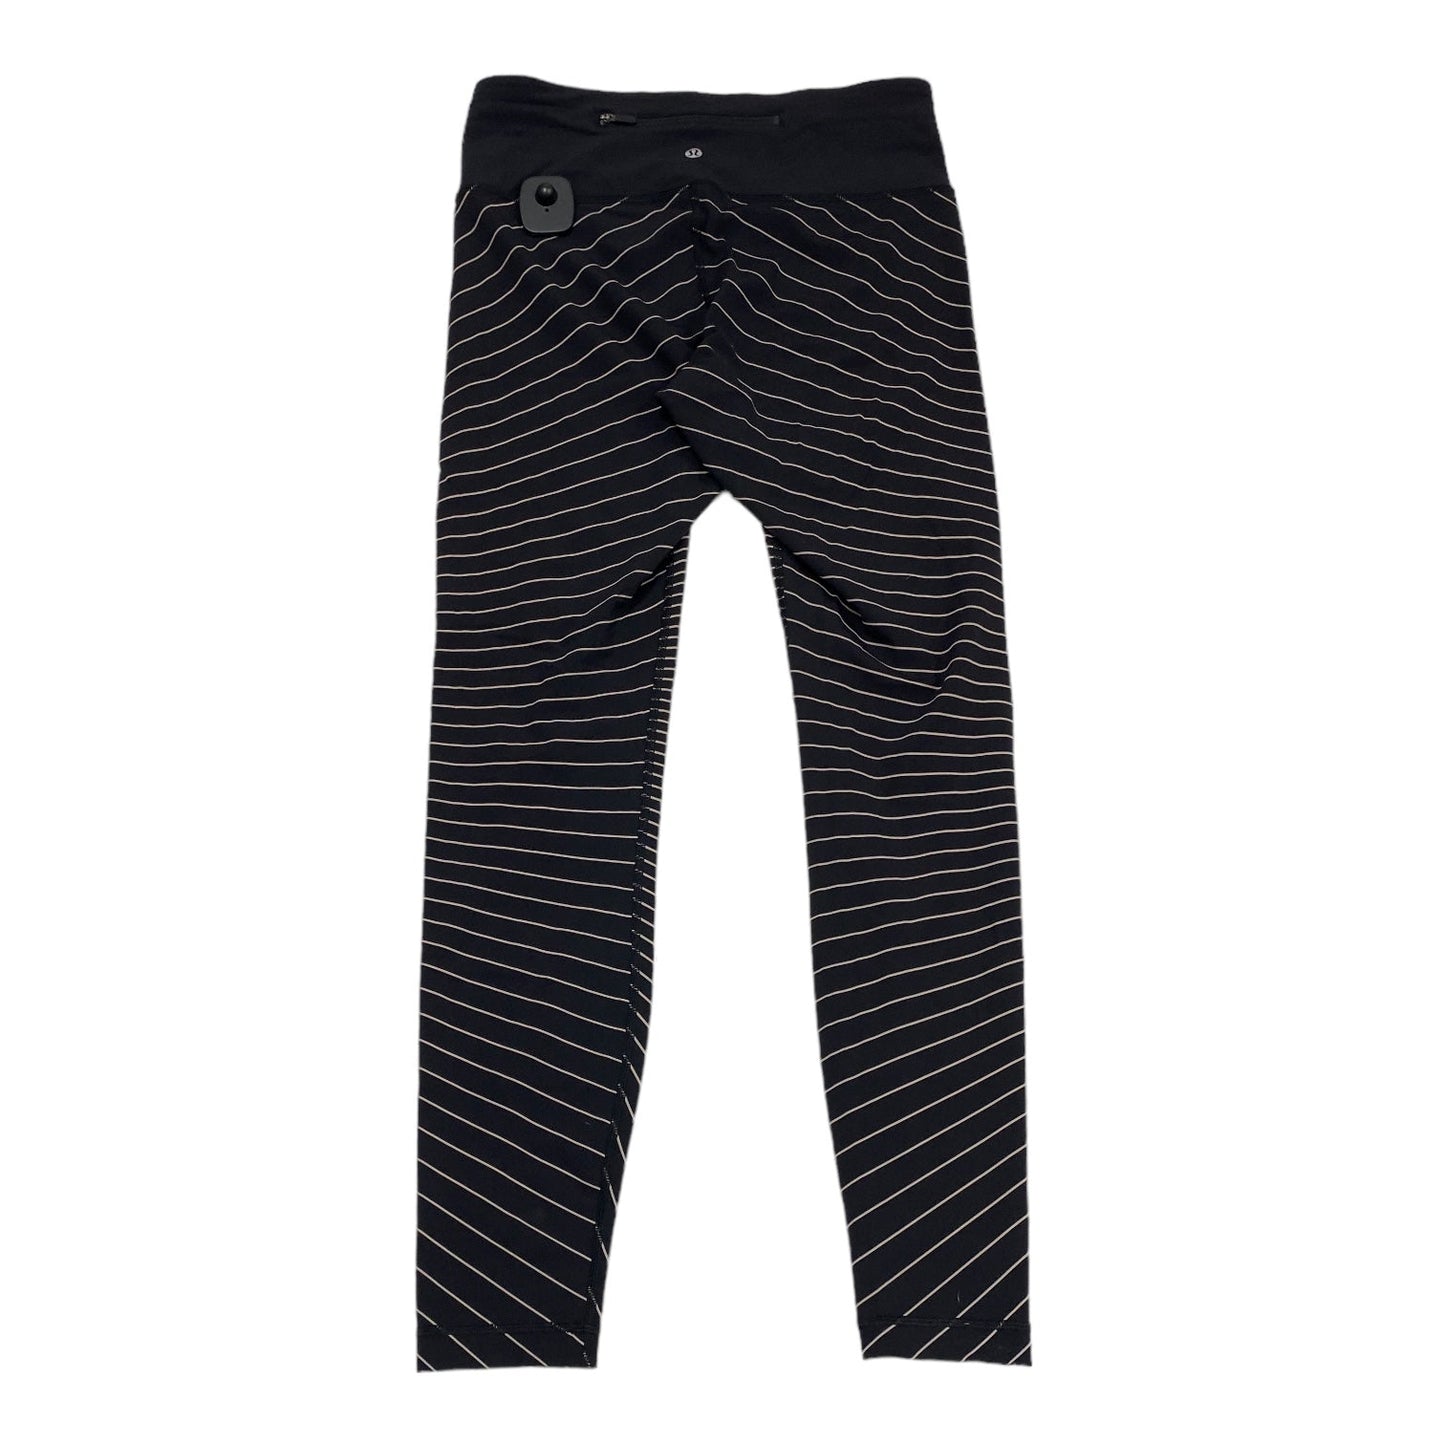 Striped Pattern Athletic Pants Lululemon, Size 8